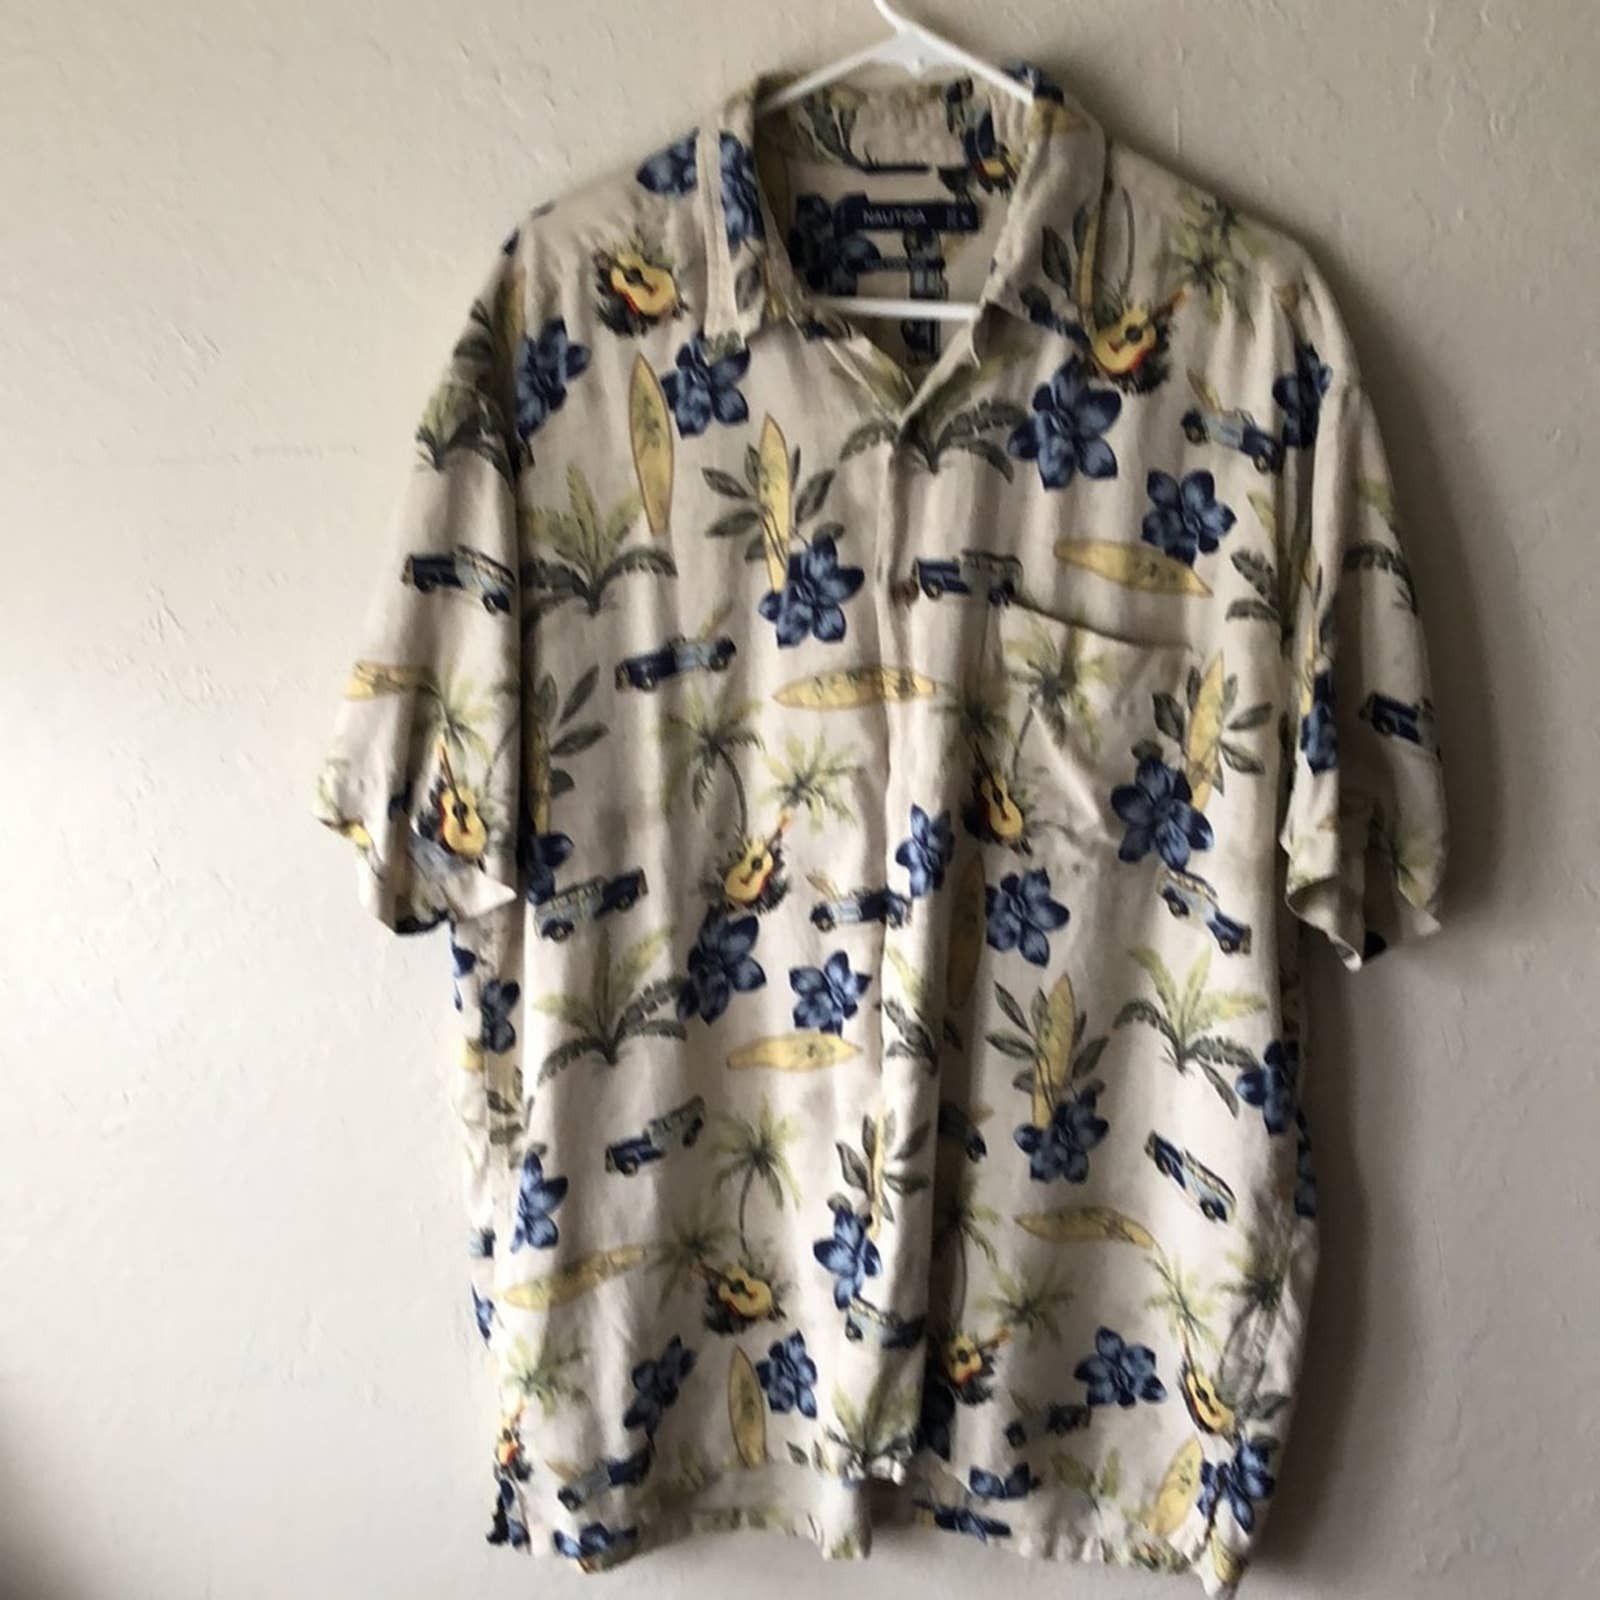 Nautica Nautica Easy Care Men’s Hawaiian Short Sleeve Shirt Size US XL / EU 56 / 4 - 2 Preview